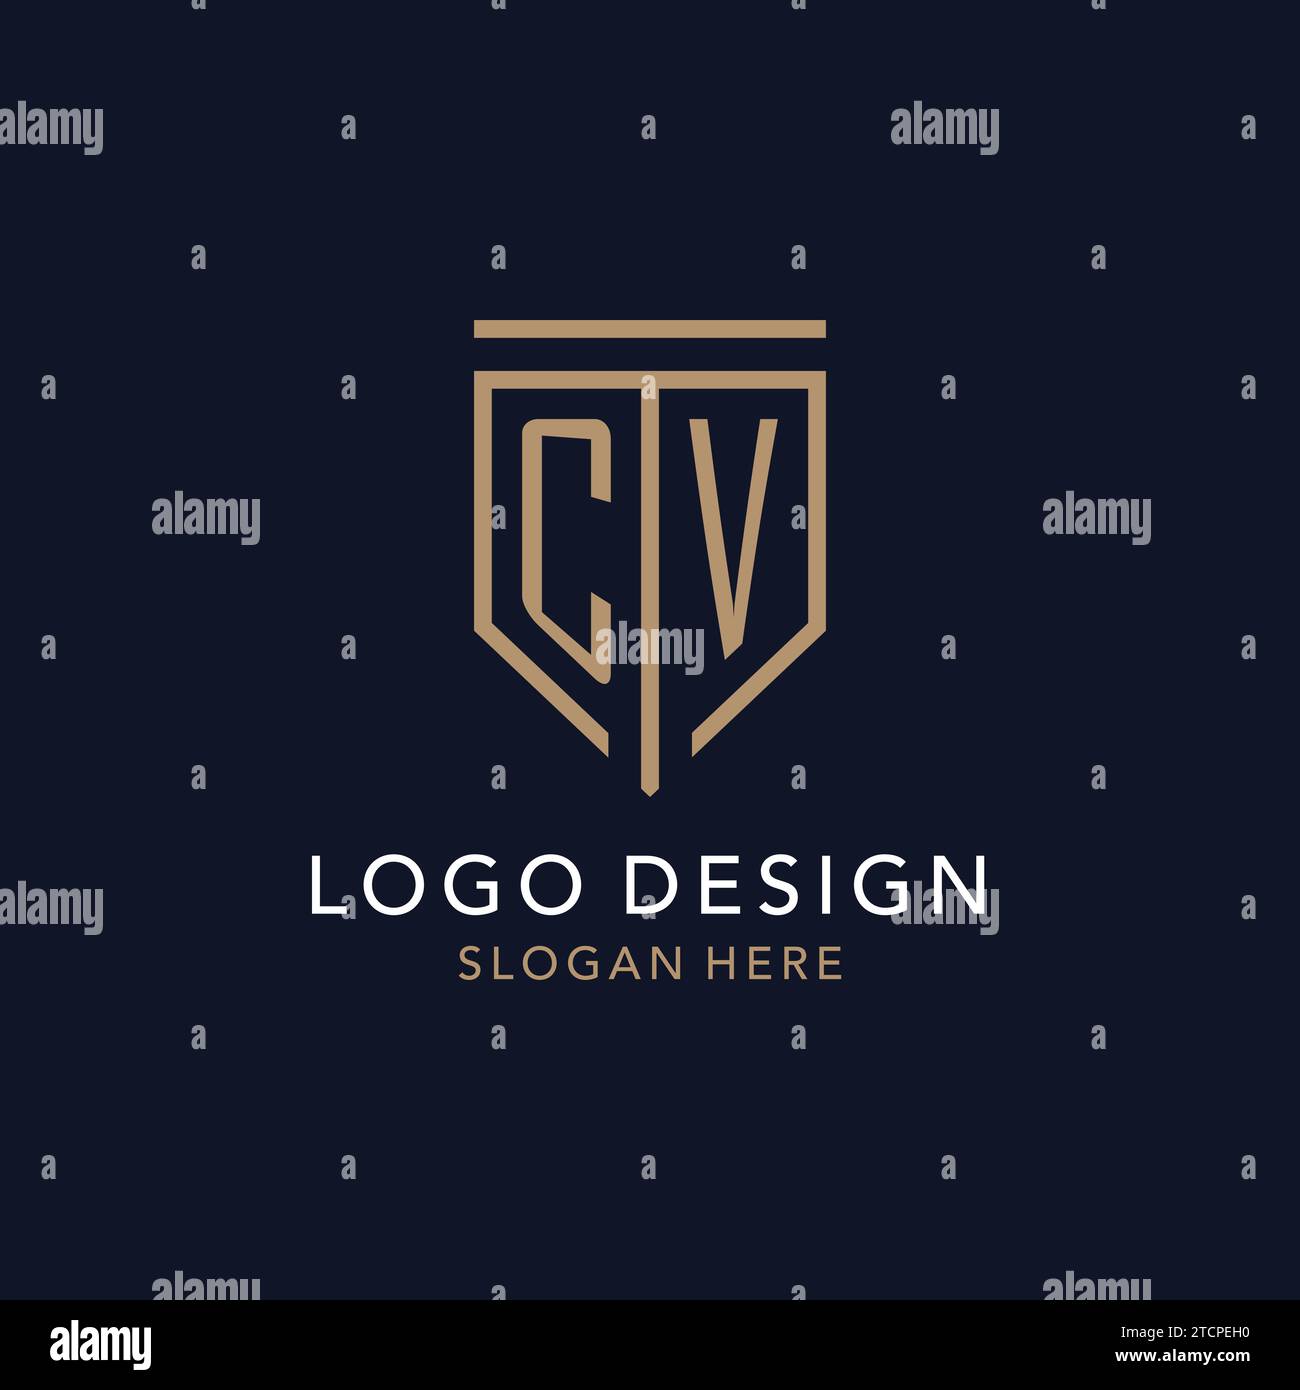 CV initial logo monogram with simple luxury shield icon design inspiration Stock Vector